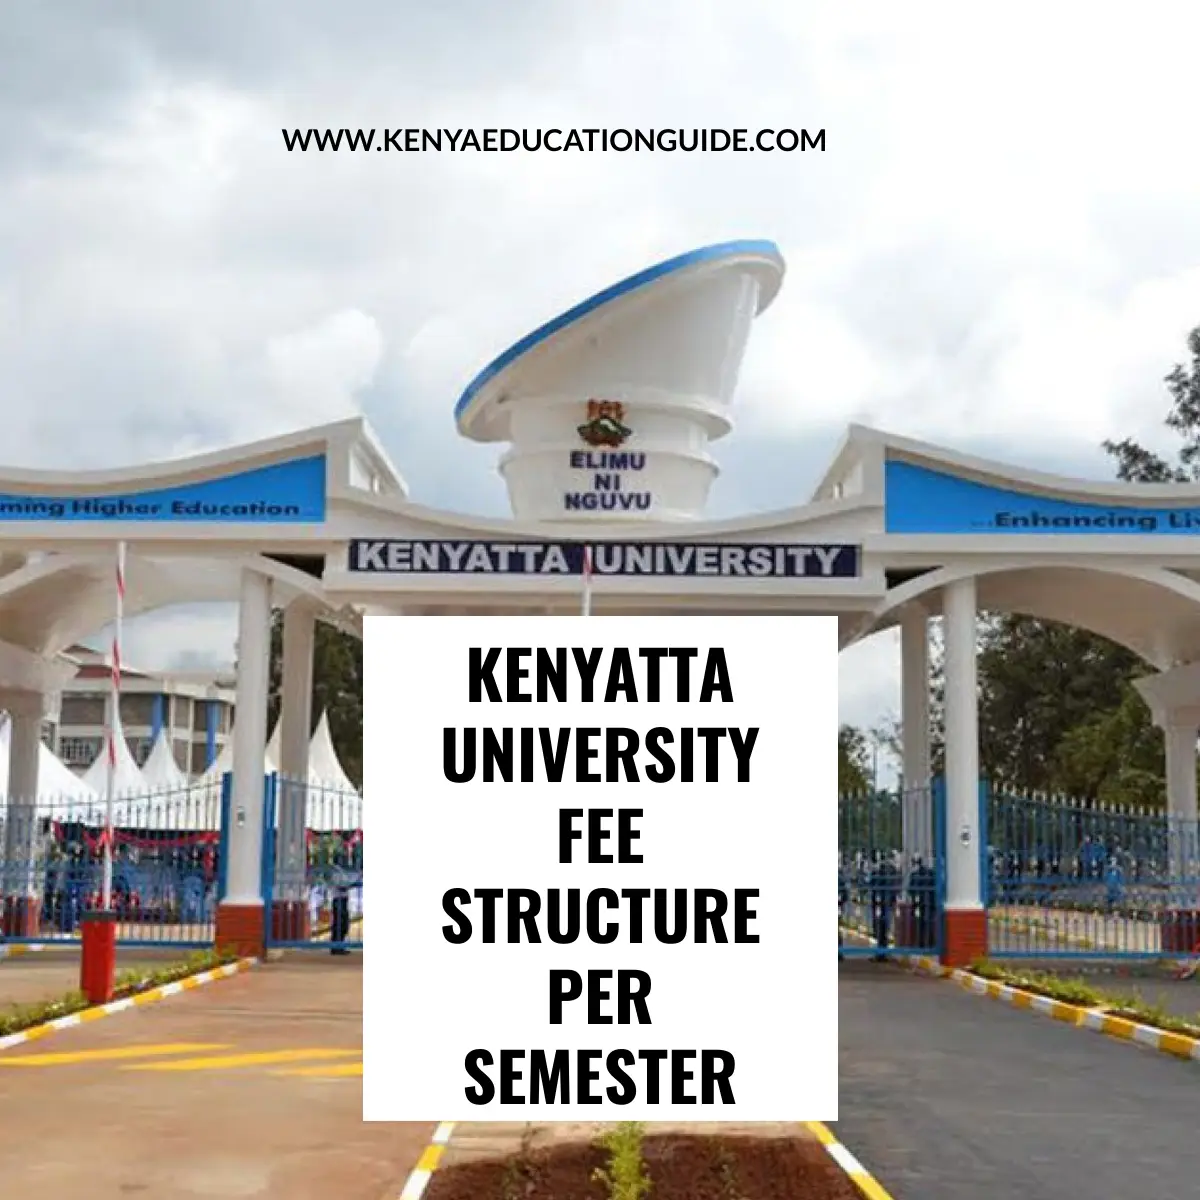 Kenyatta University Fee Structure per Semester